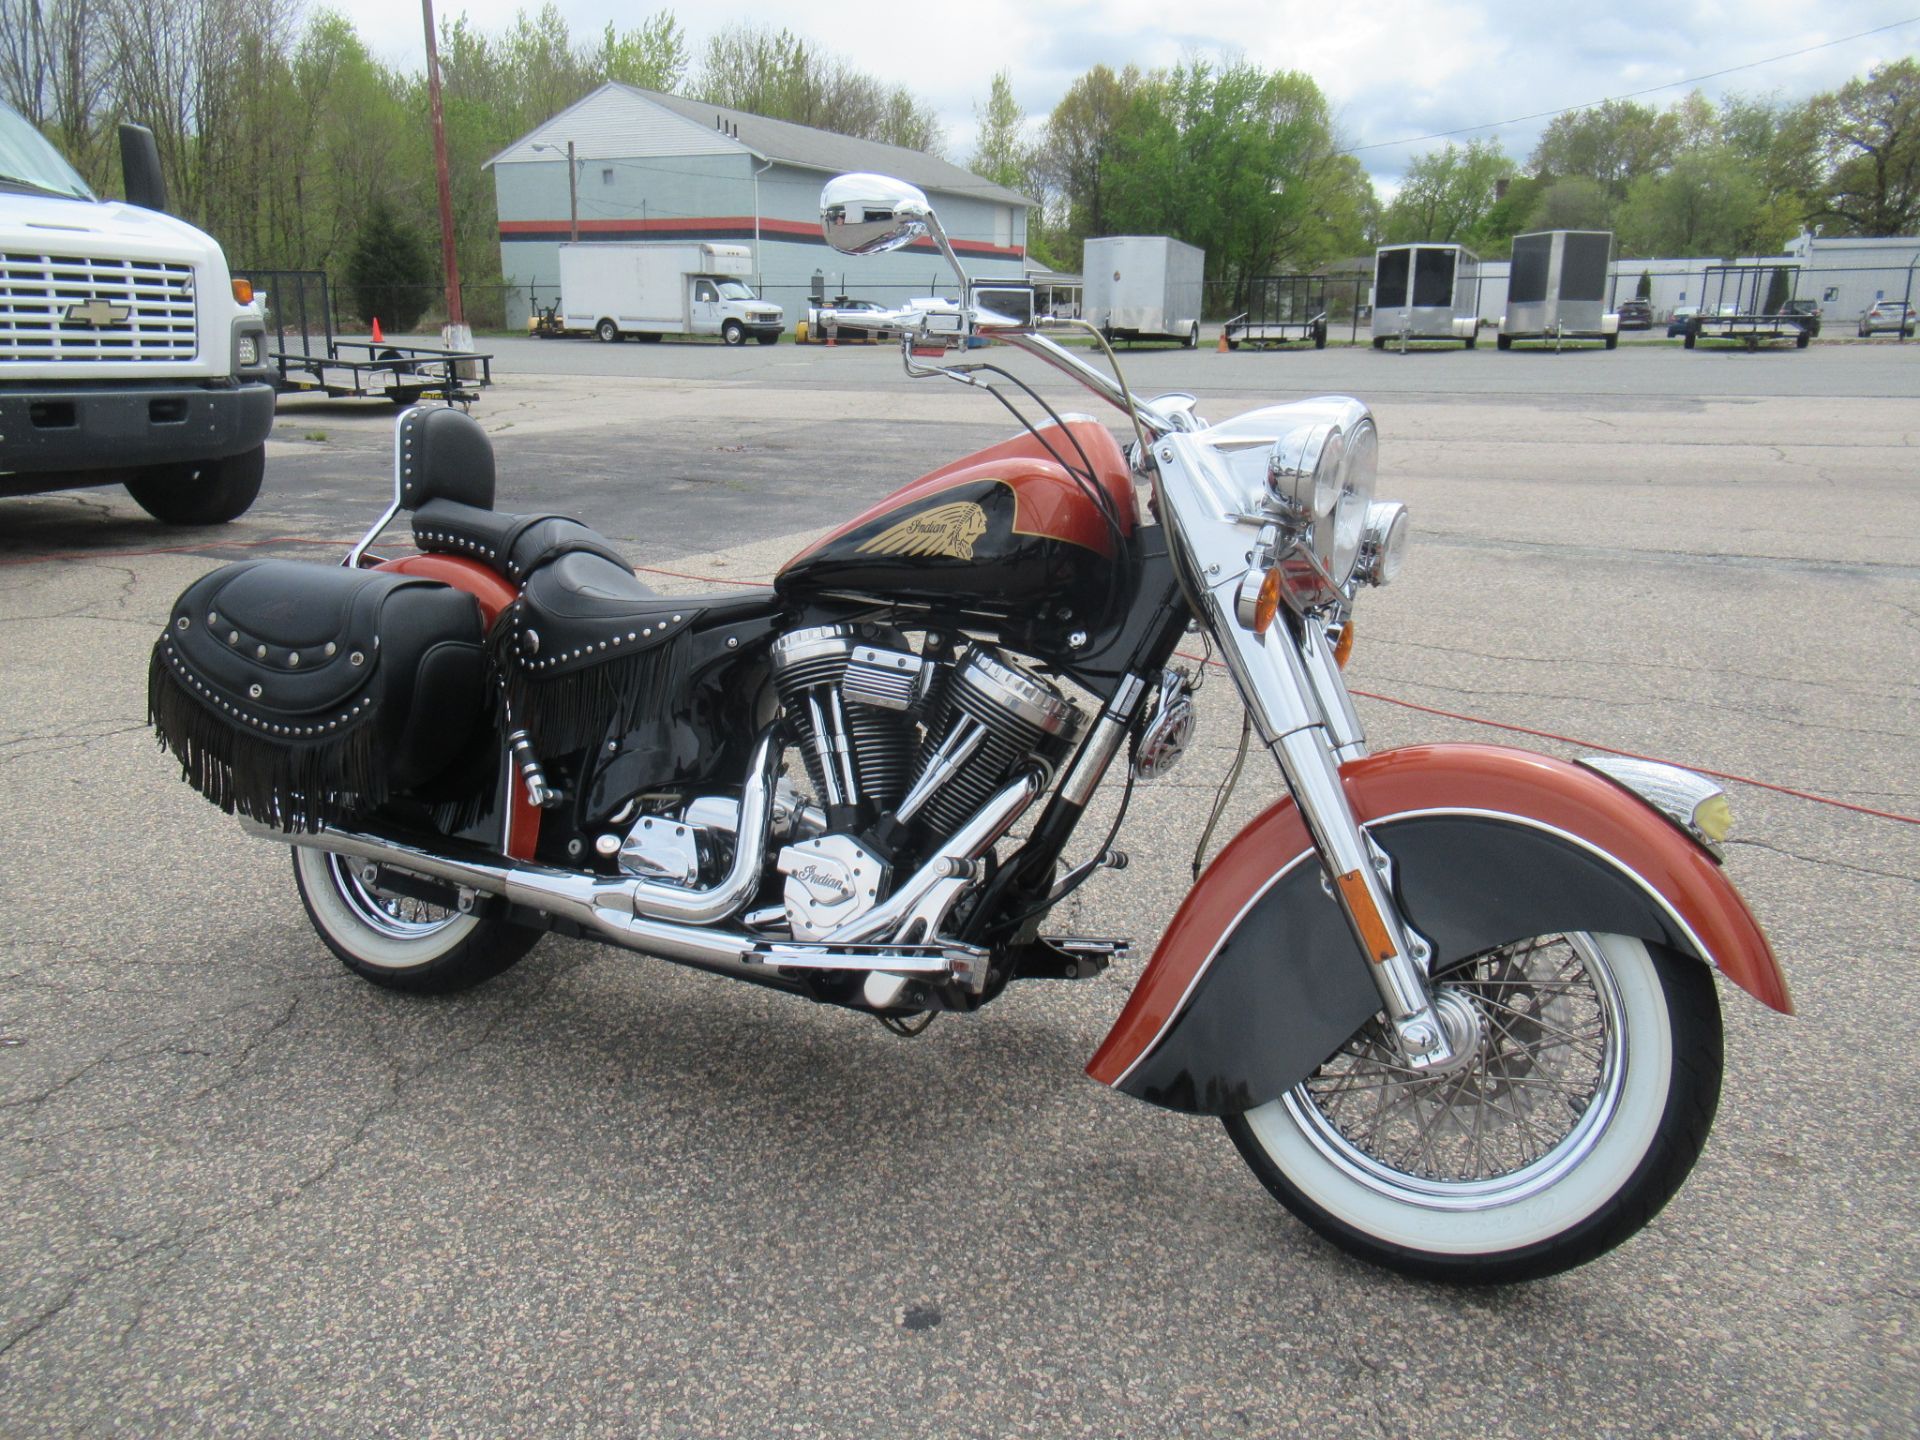 2002 Indian Motorcycle Spirit Deluxe in Springfield, Massachusetts - Photo 2